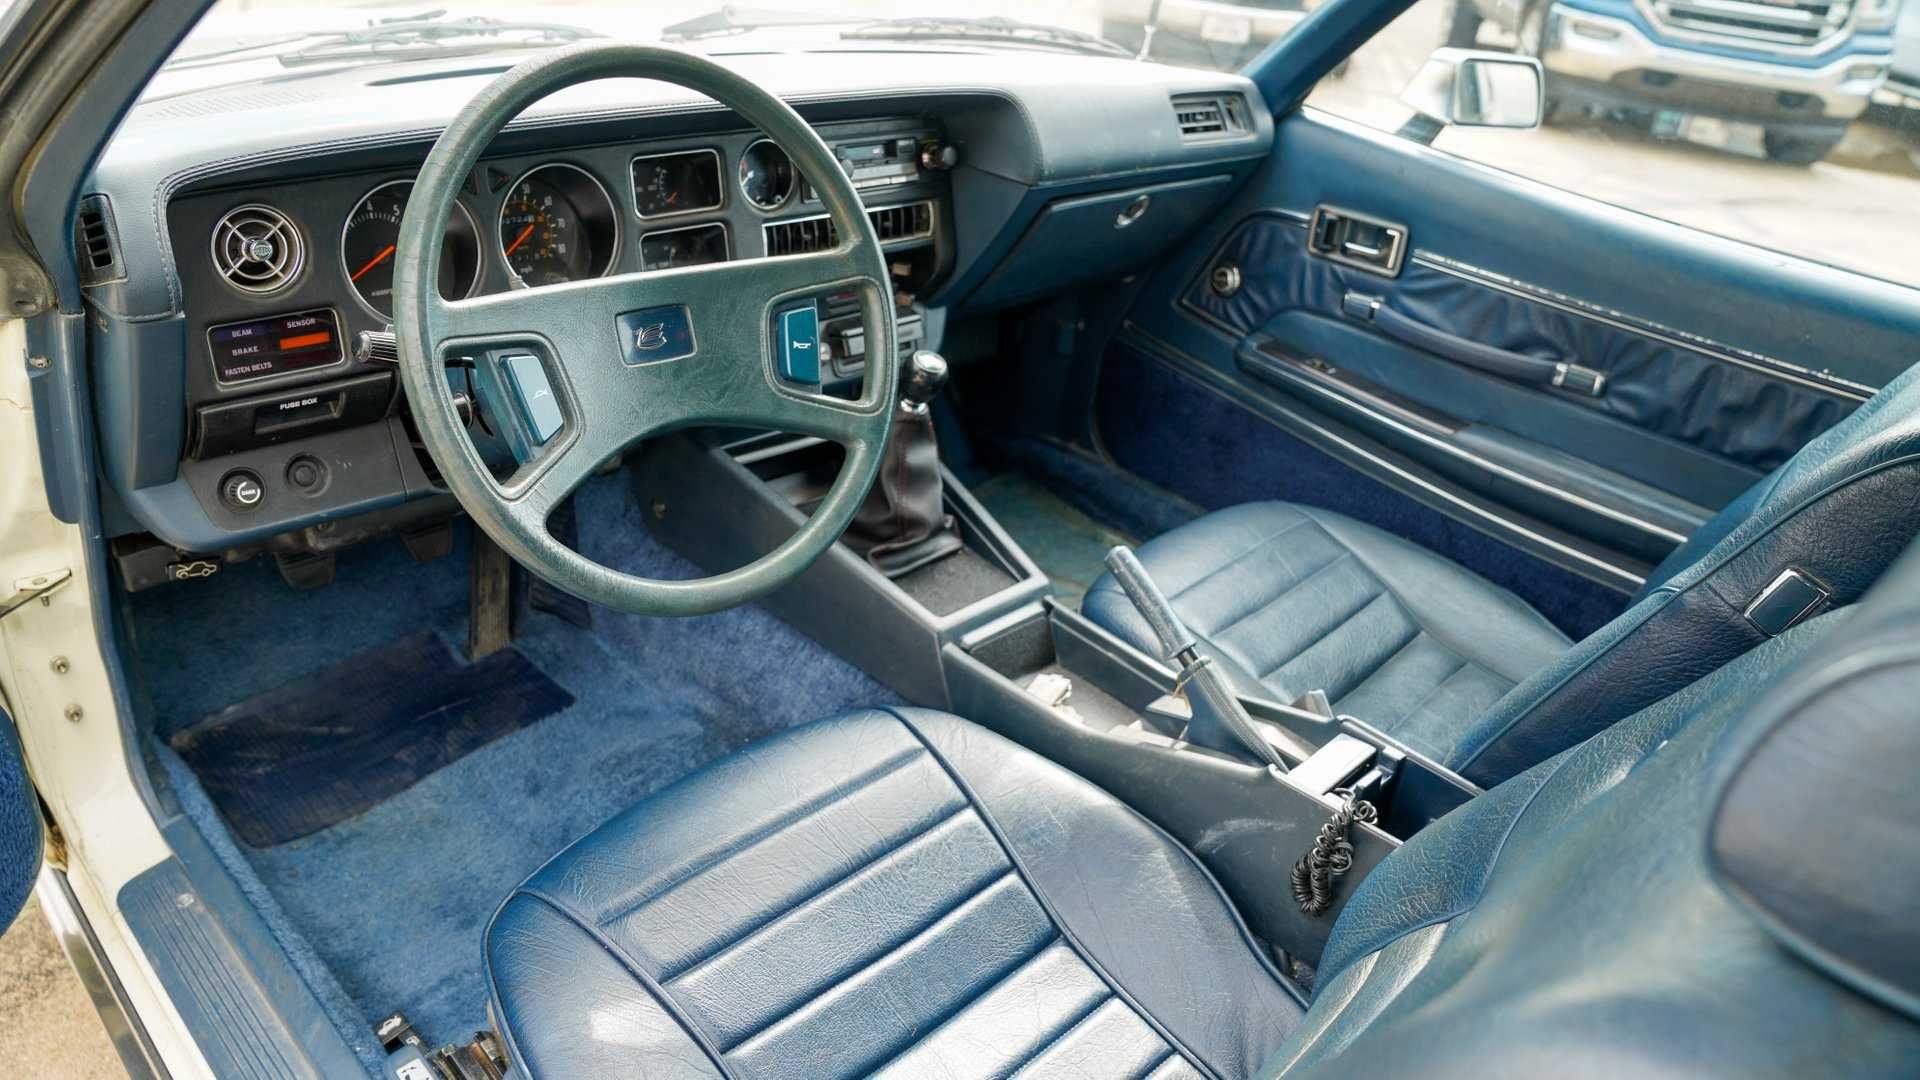 1979 Toyota celica supra interior